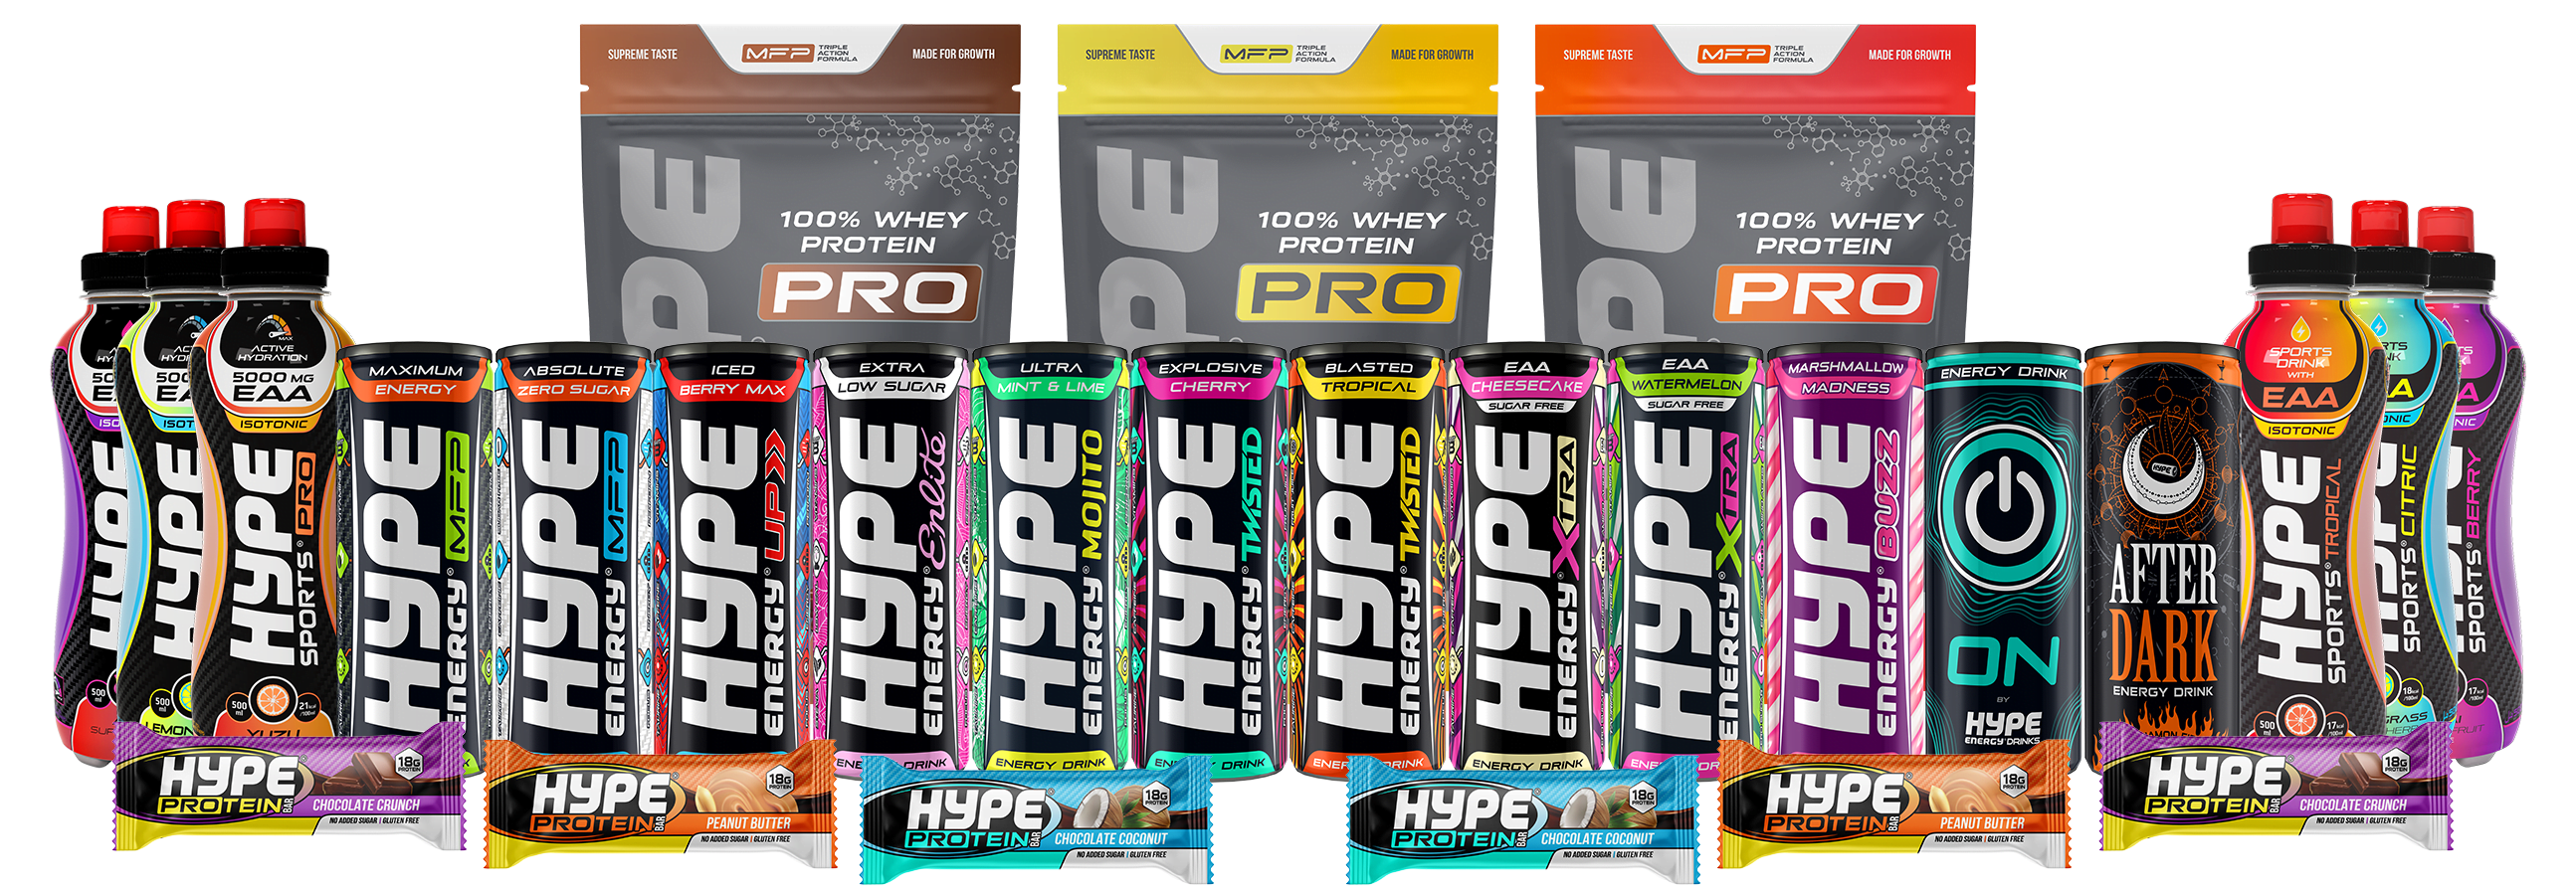 Hype's Product range